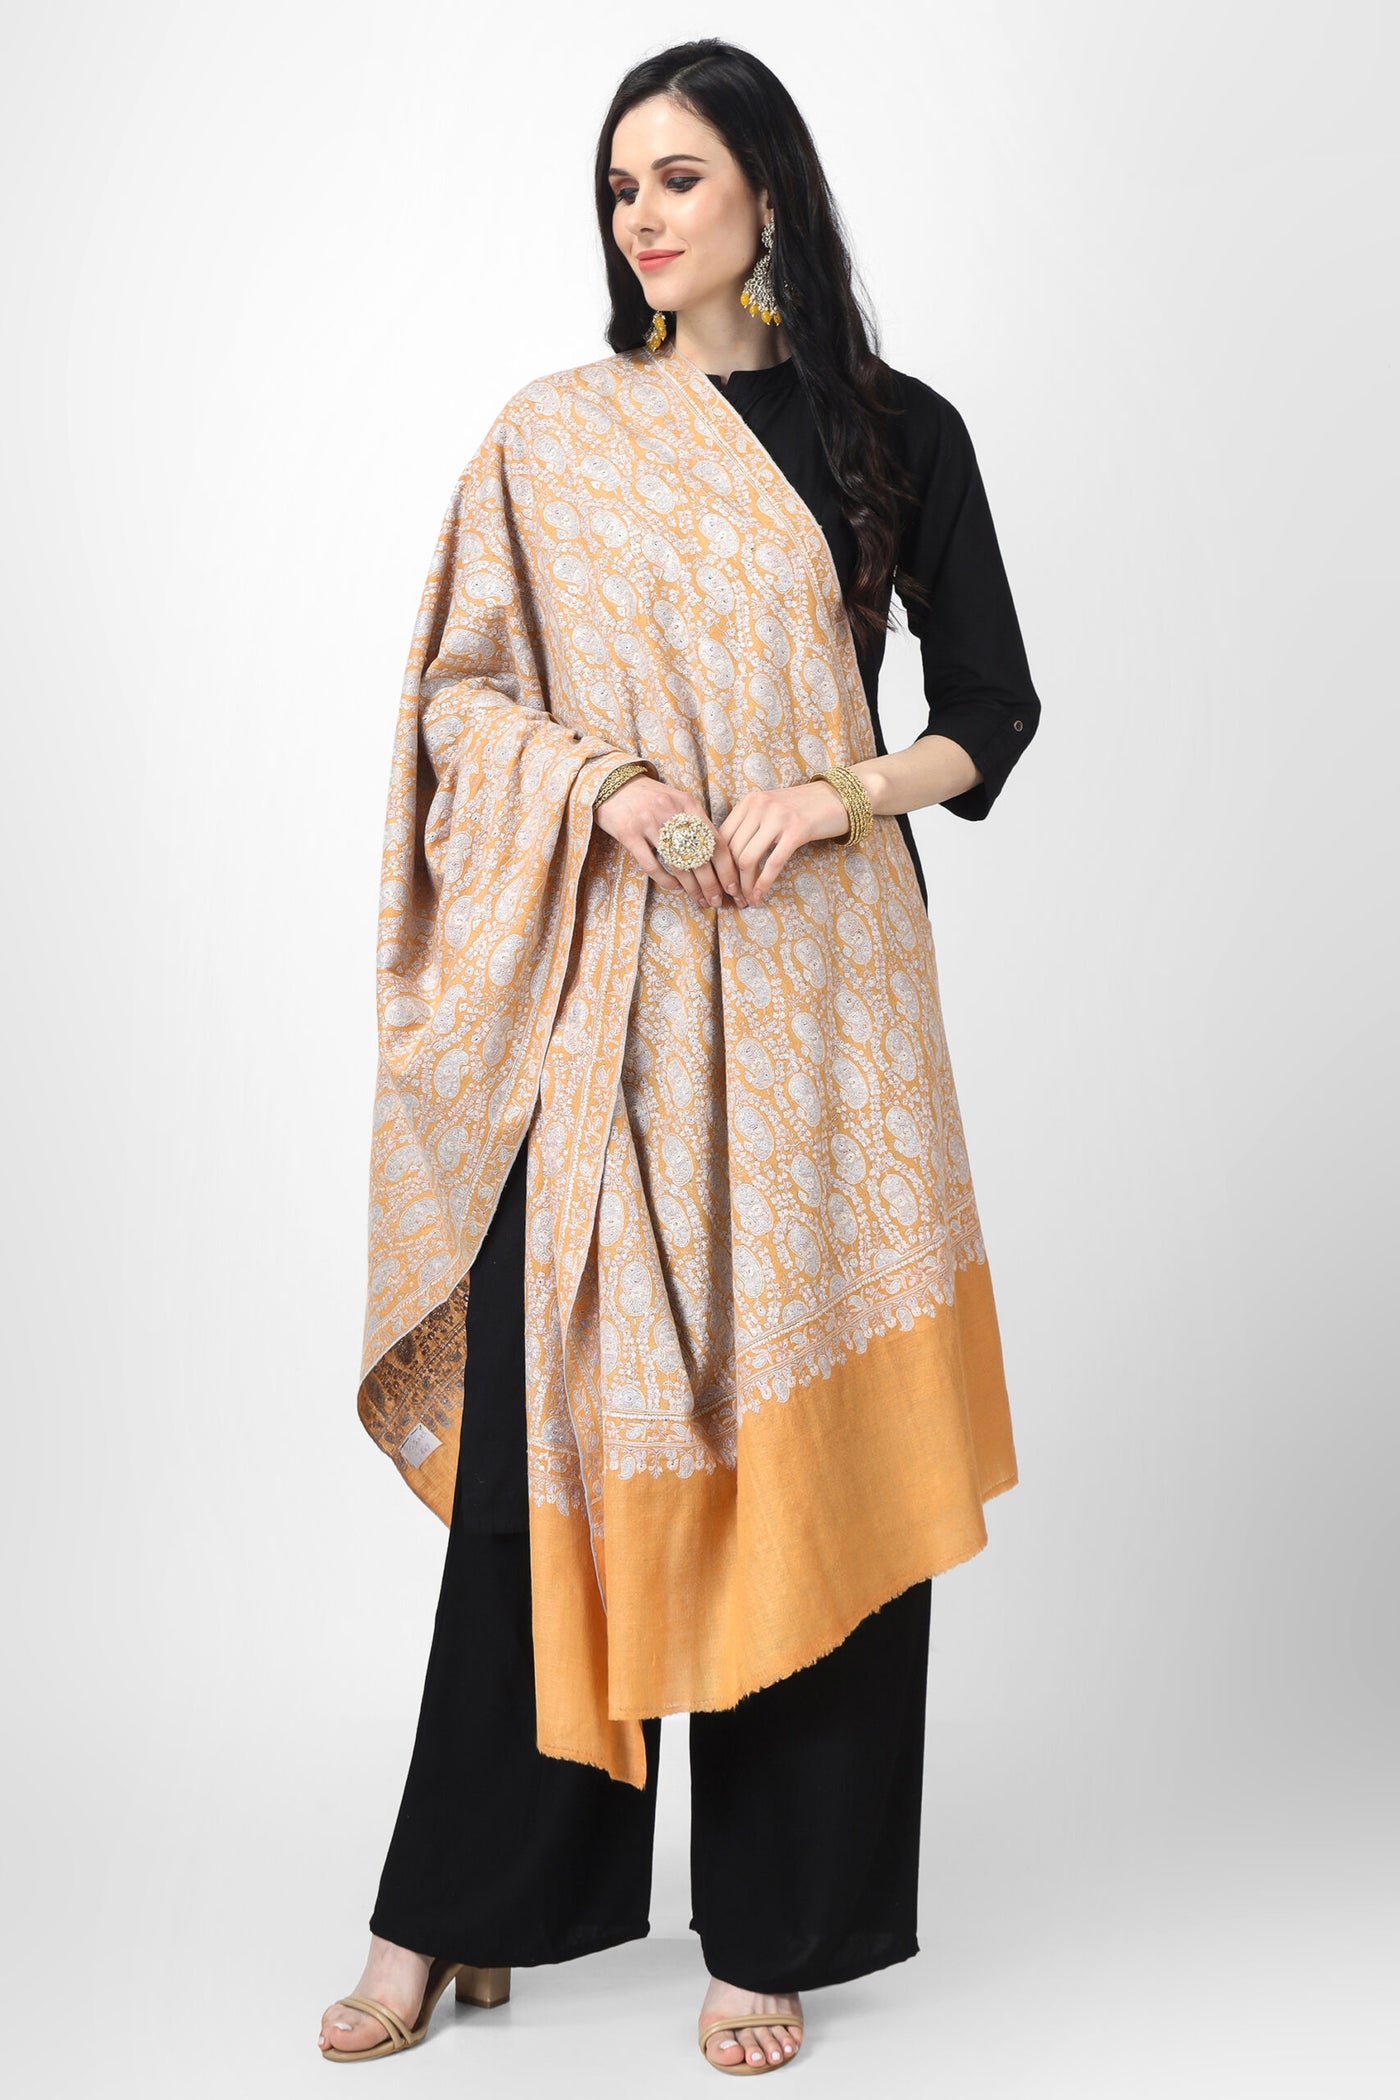 "PASHMINA SHAWL - Unmatched Softness and Grace" Light Orange Pashmina Badami Sozni Jama Shawl is a testament to the skill and craftsmanship of Kashmiri weavers and embroiderers. "PASHMINA SHAWLS IN HONG KONG - Asian Luxury and Timeless Beauty"